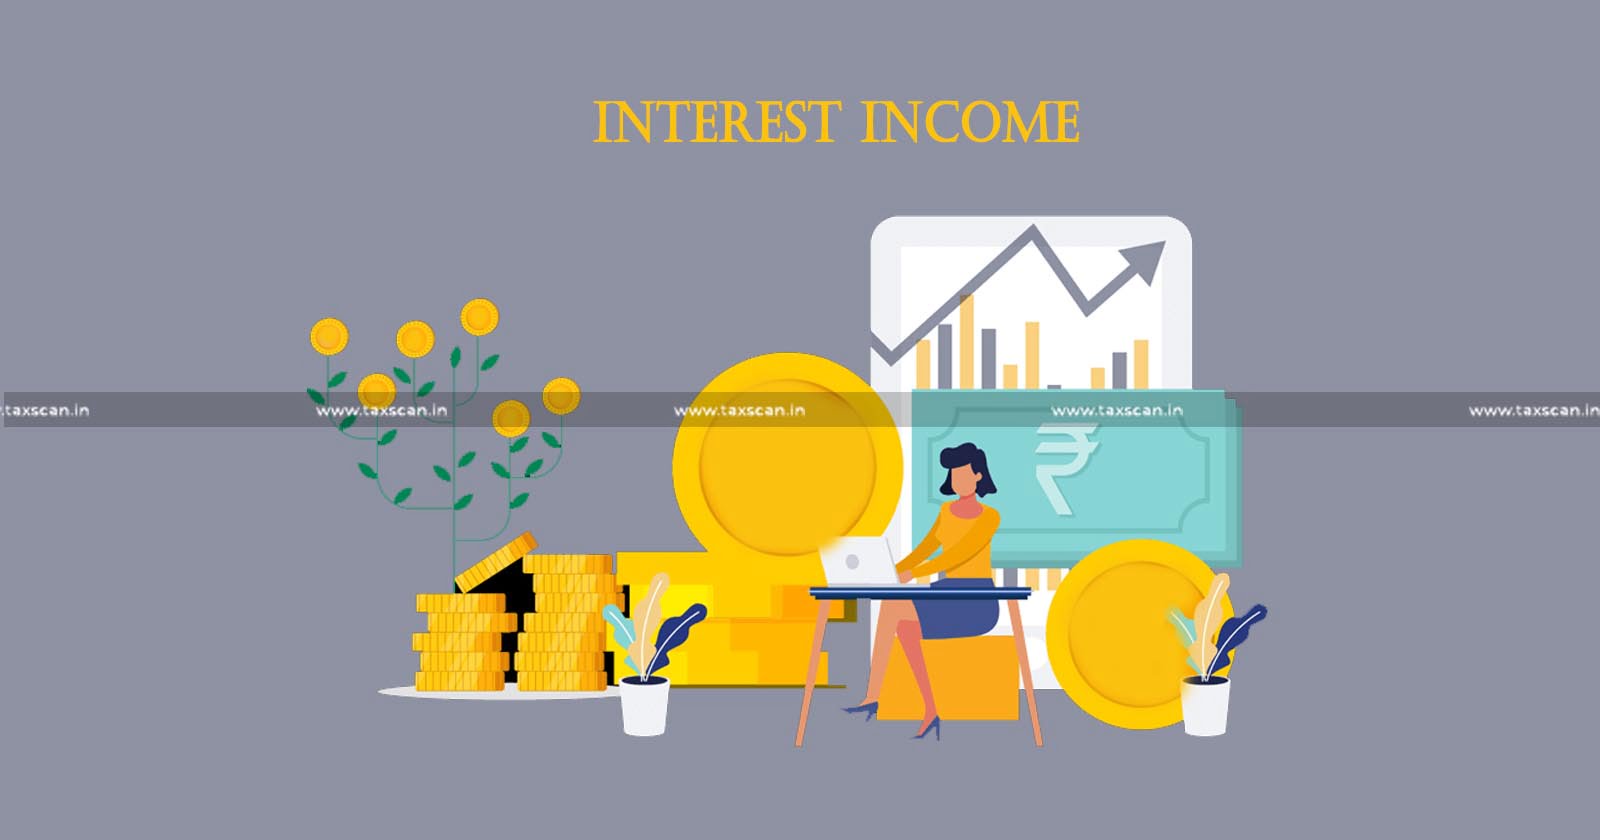 Cooperative society - Income Tax - Interest income - Tax deduction - Co operative bank - ITAT Mumbai - TAXSCAN